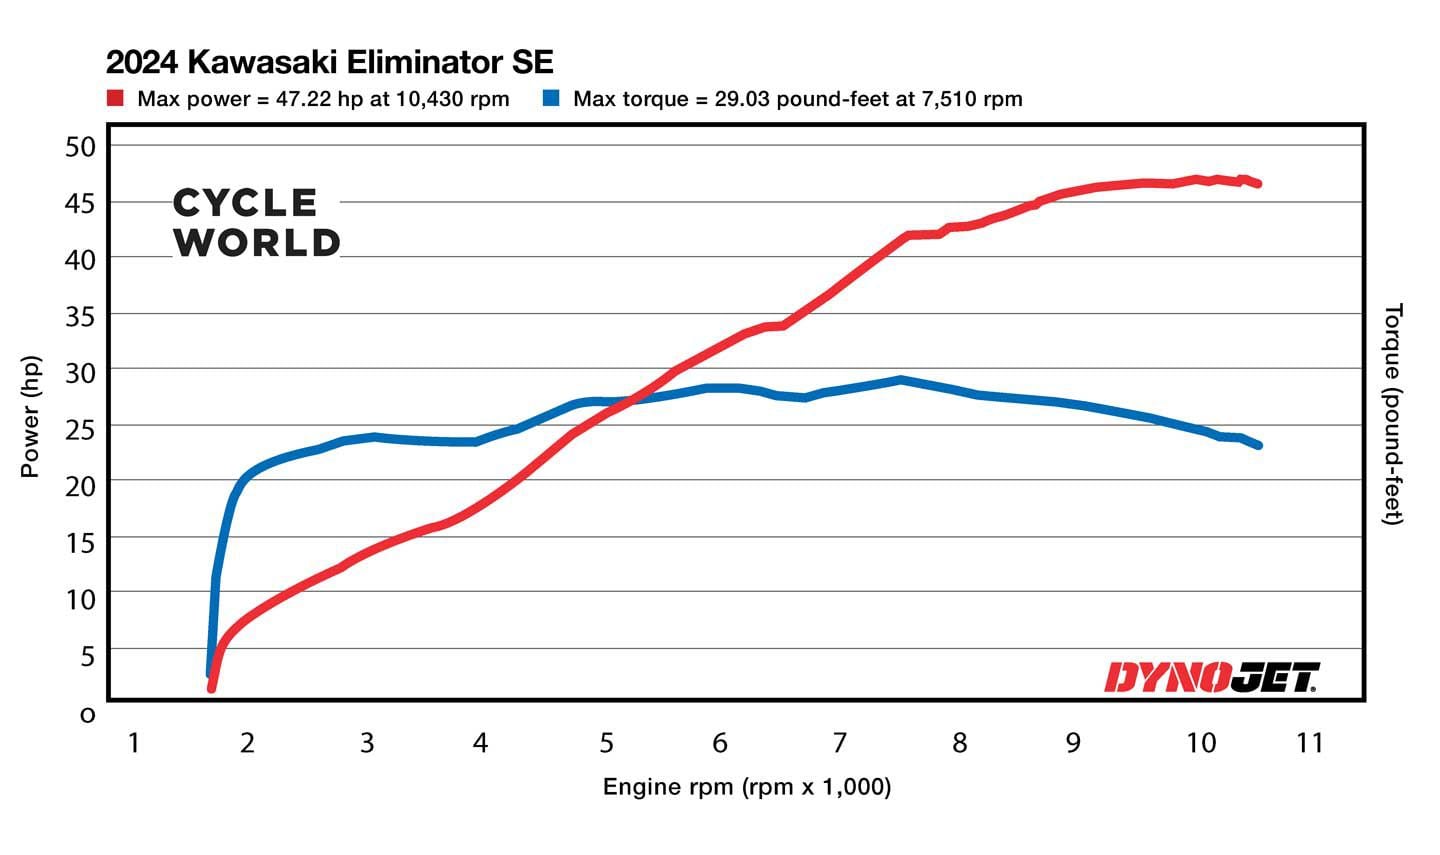 How powerful is the 2024 Kawasaki Eliminator?